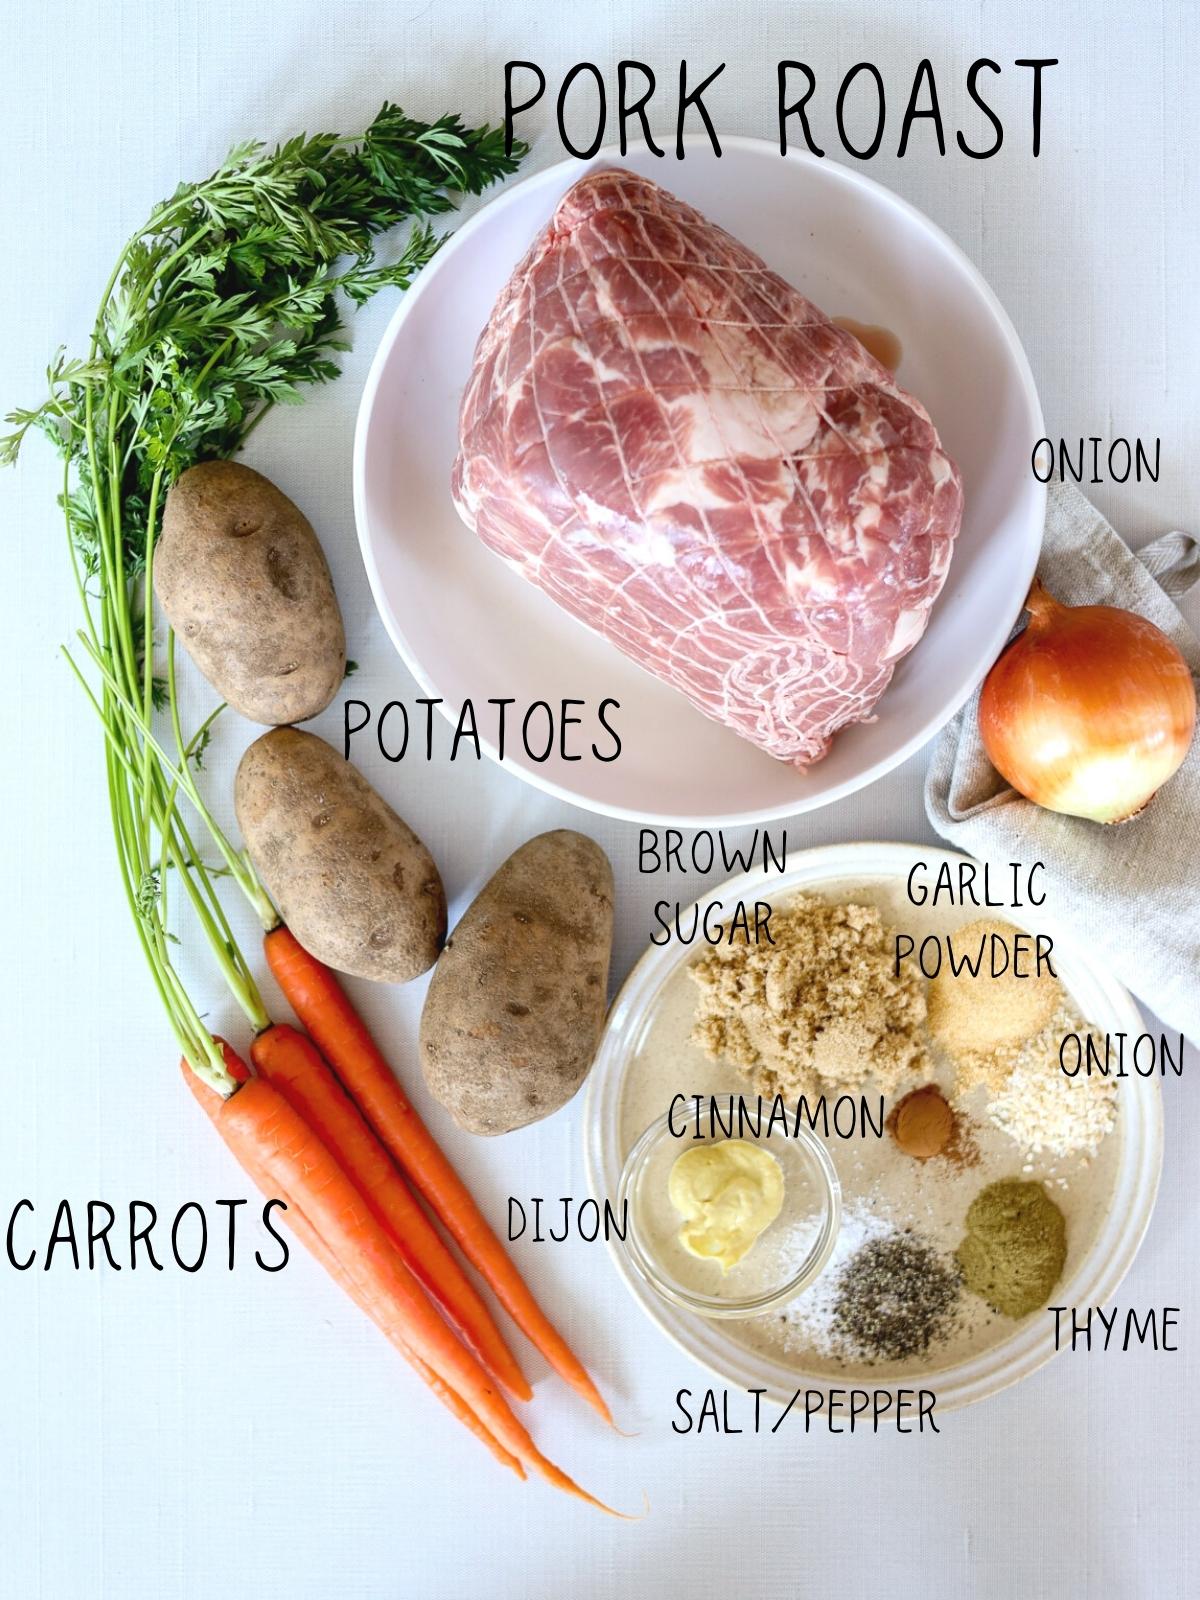 ingredients for instant pot pork roast, including carrots, onion, thyme, dijon, cinnamon, potatoes, garlic powder